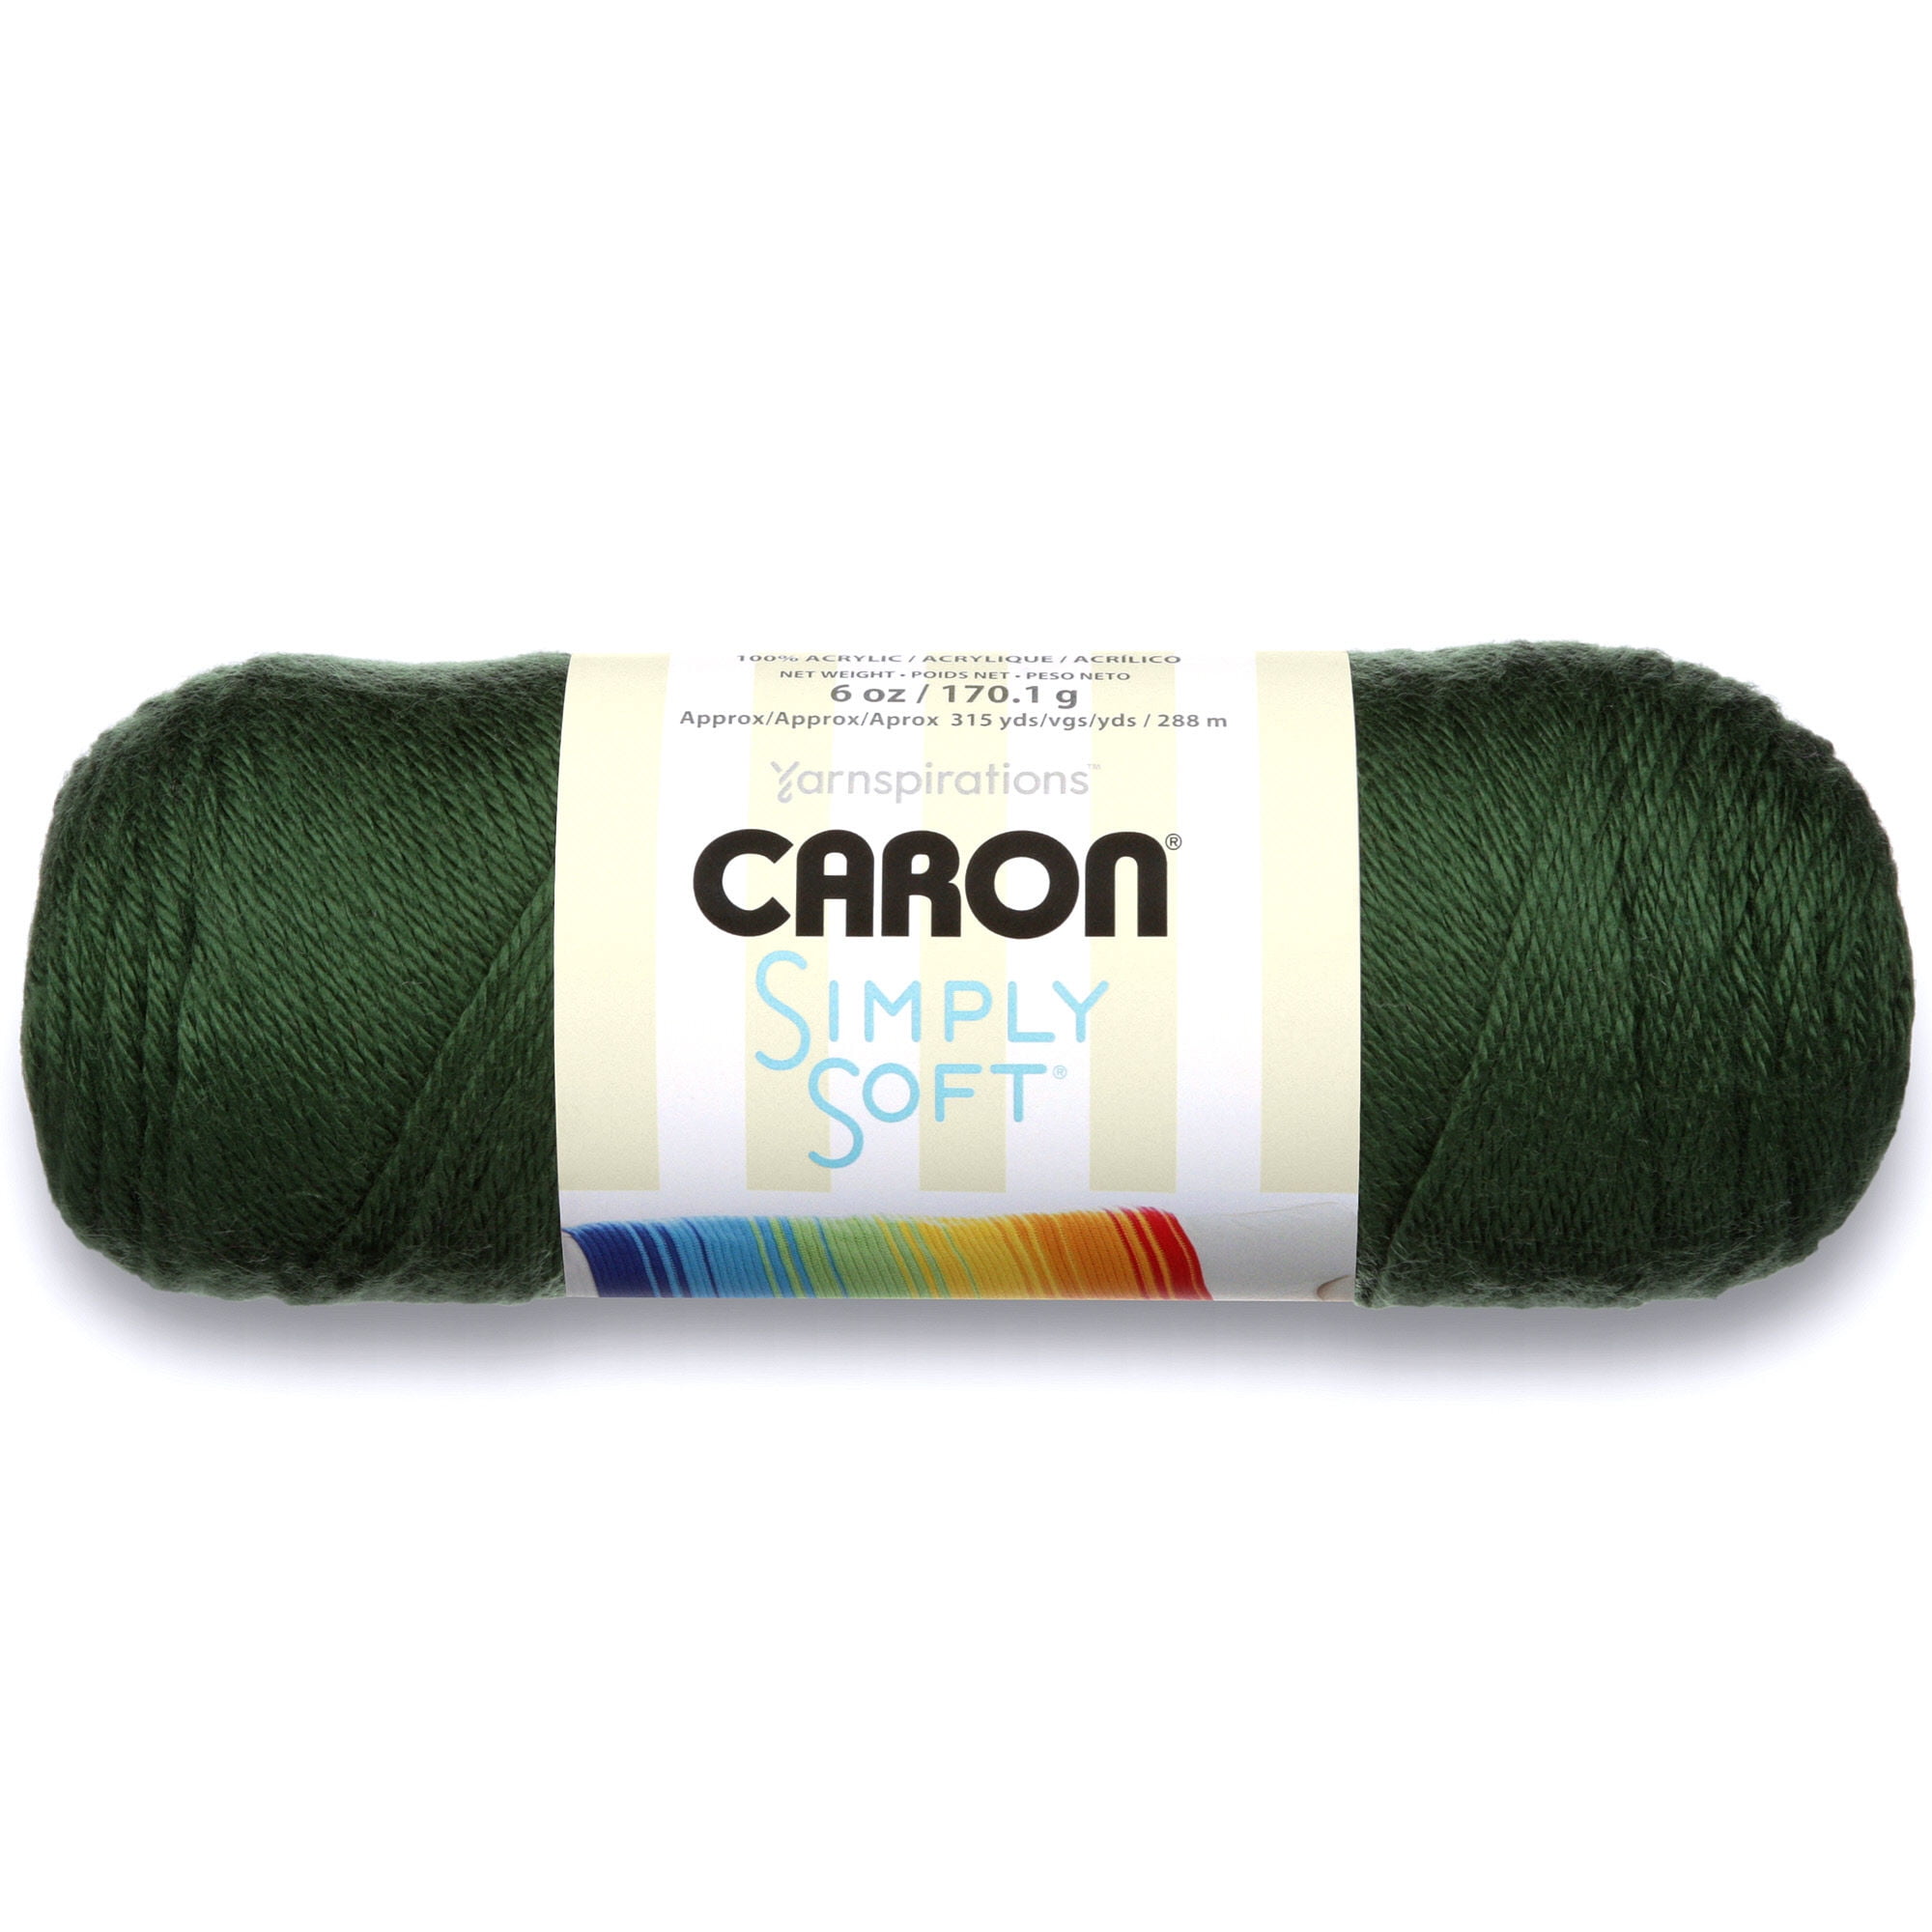 Caron Super Chunky Cakes 280g Knitting Crochet Yarn 100% Acrylic